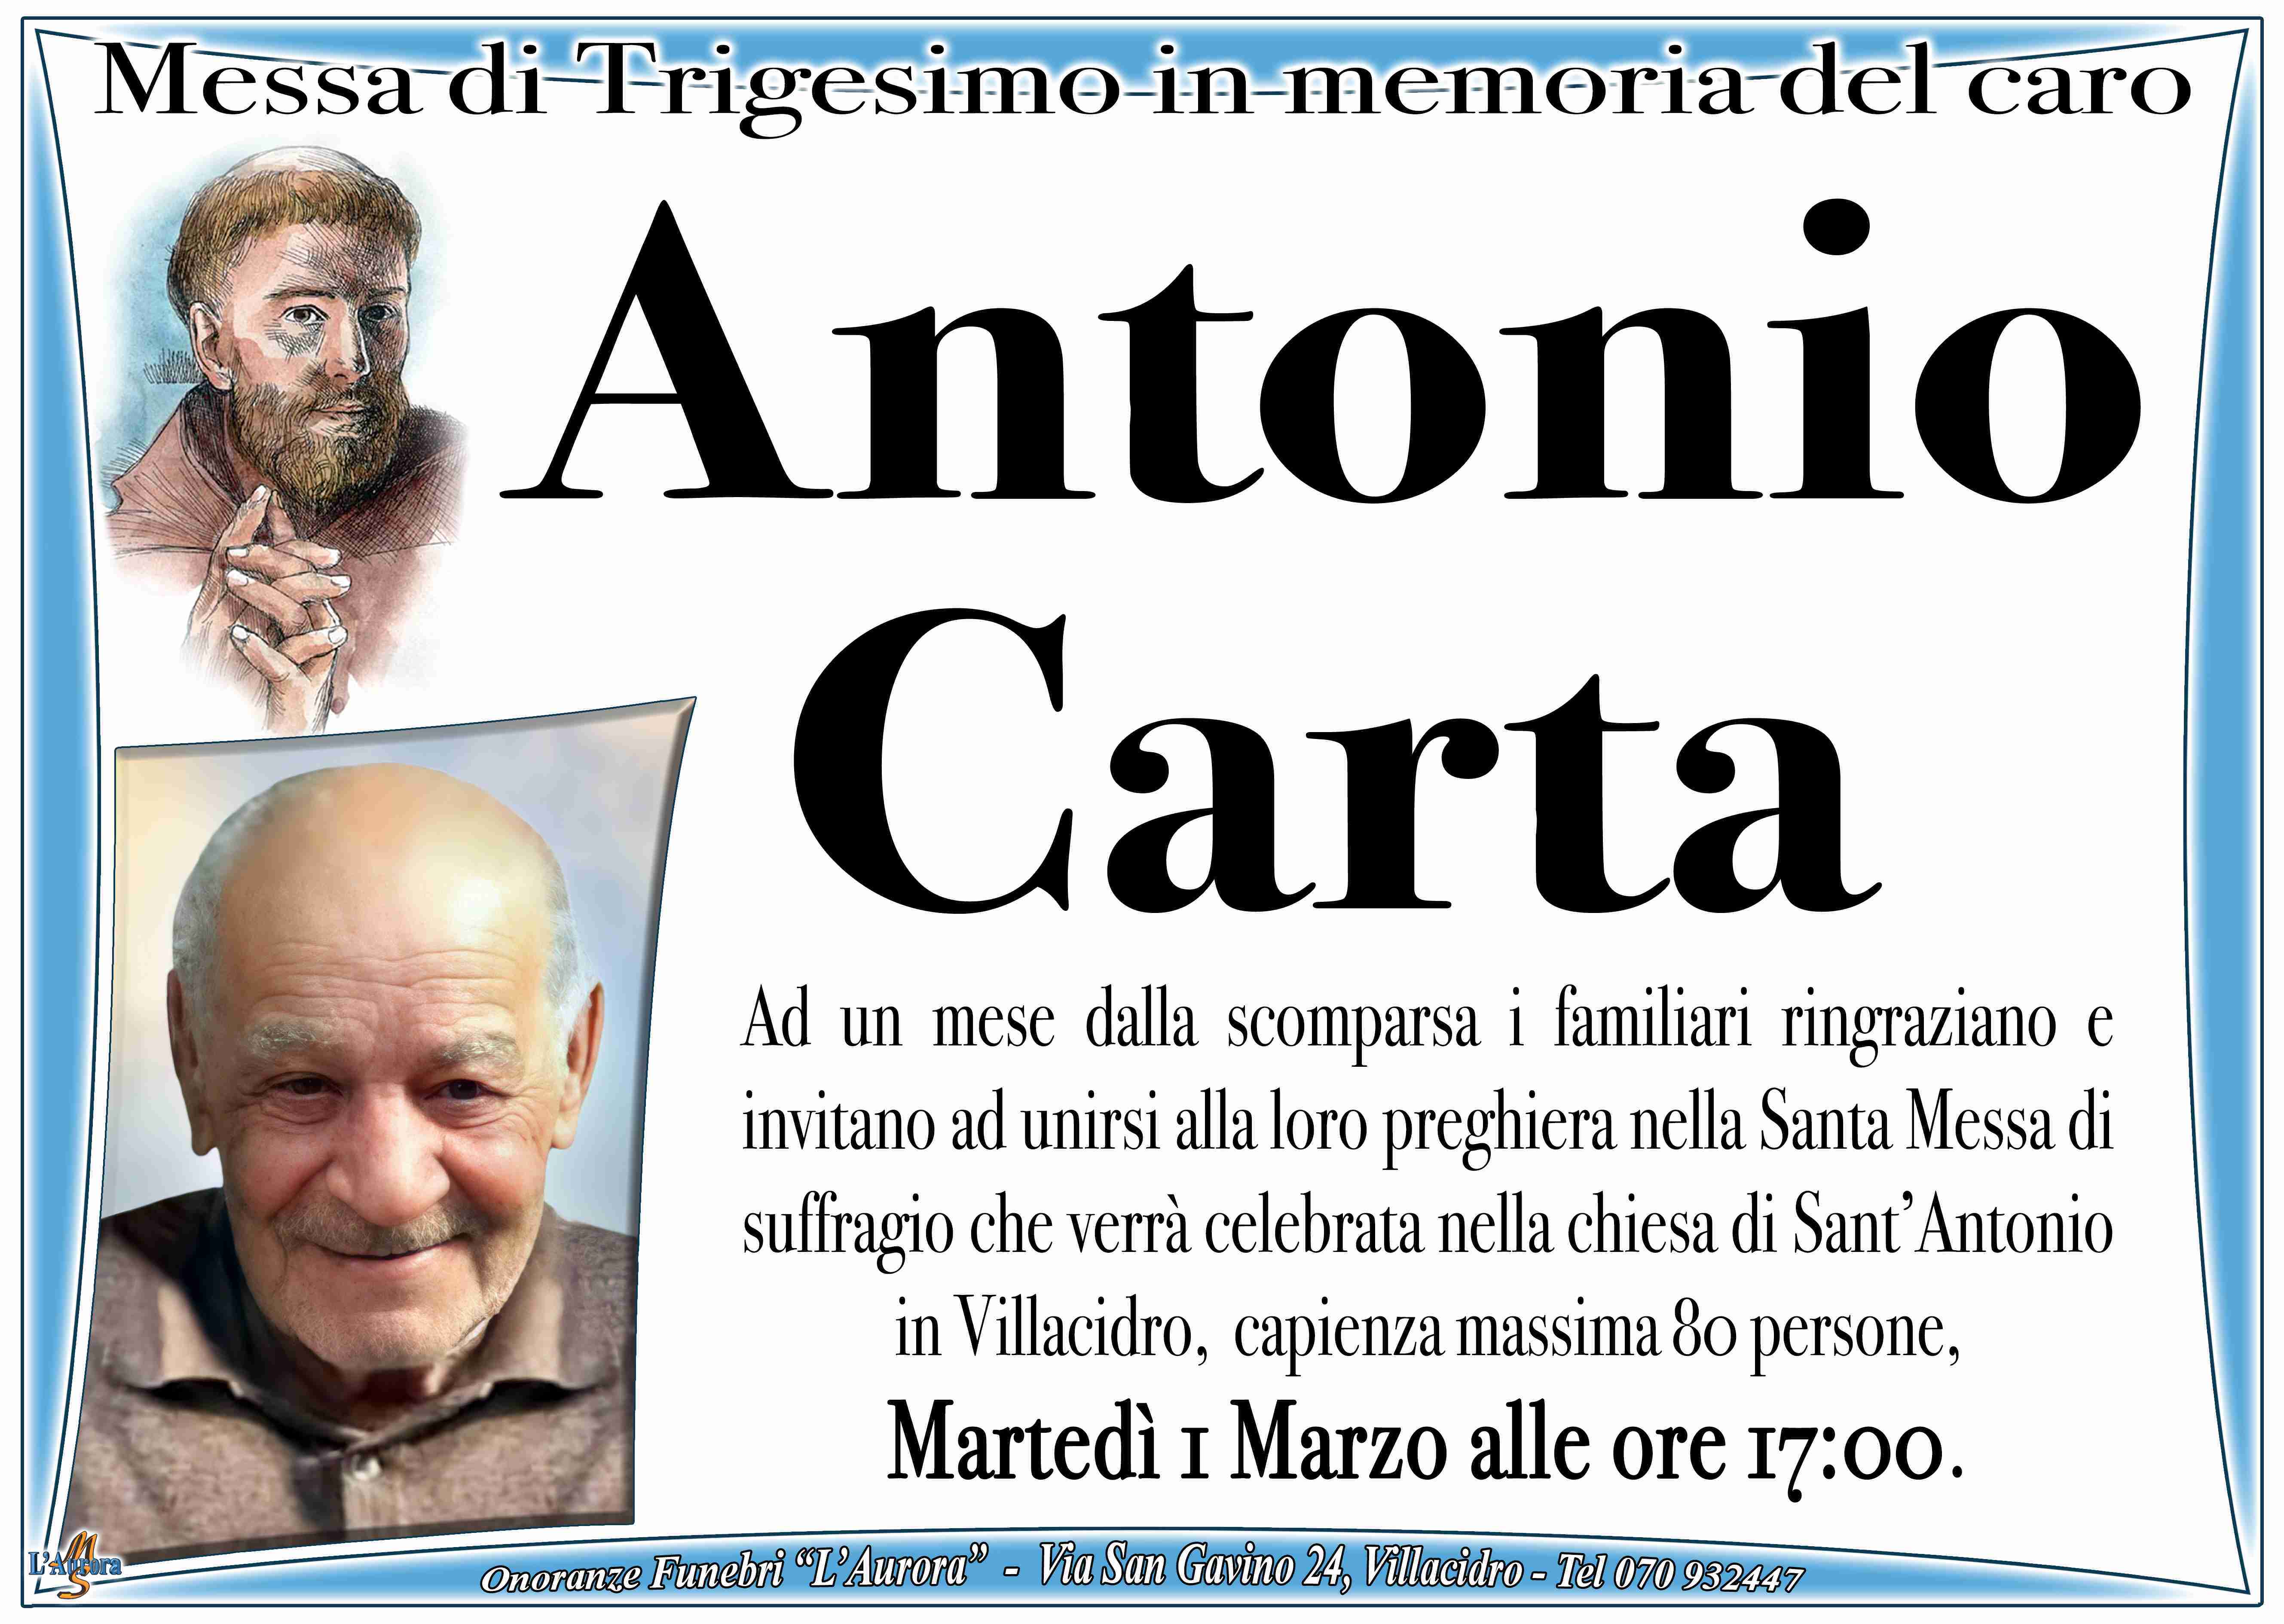 Antonio Carta